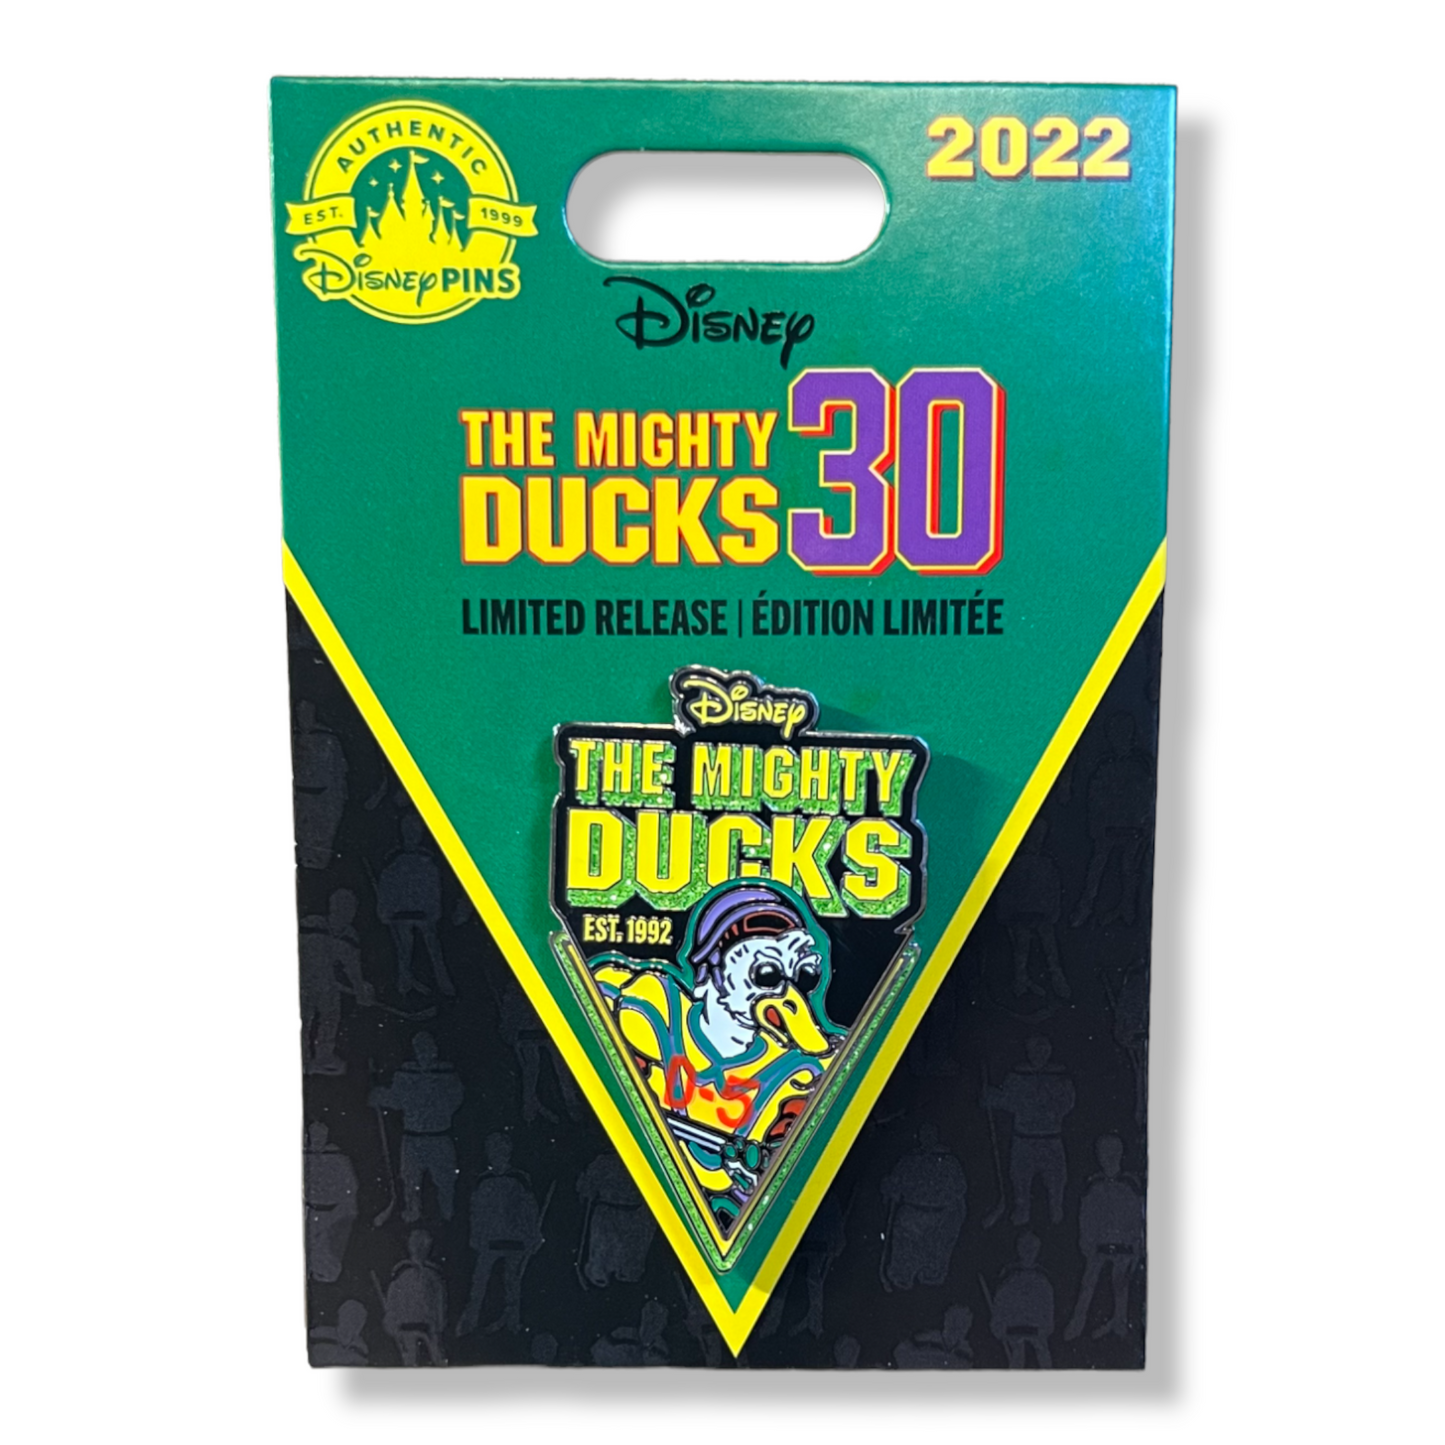 The Mighty Ducks "Est. 1992" Pin (LR)